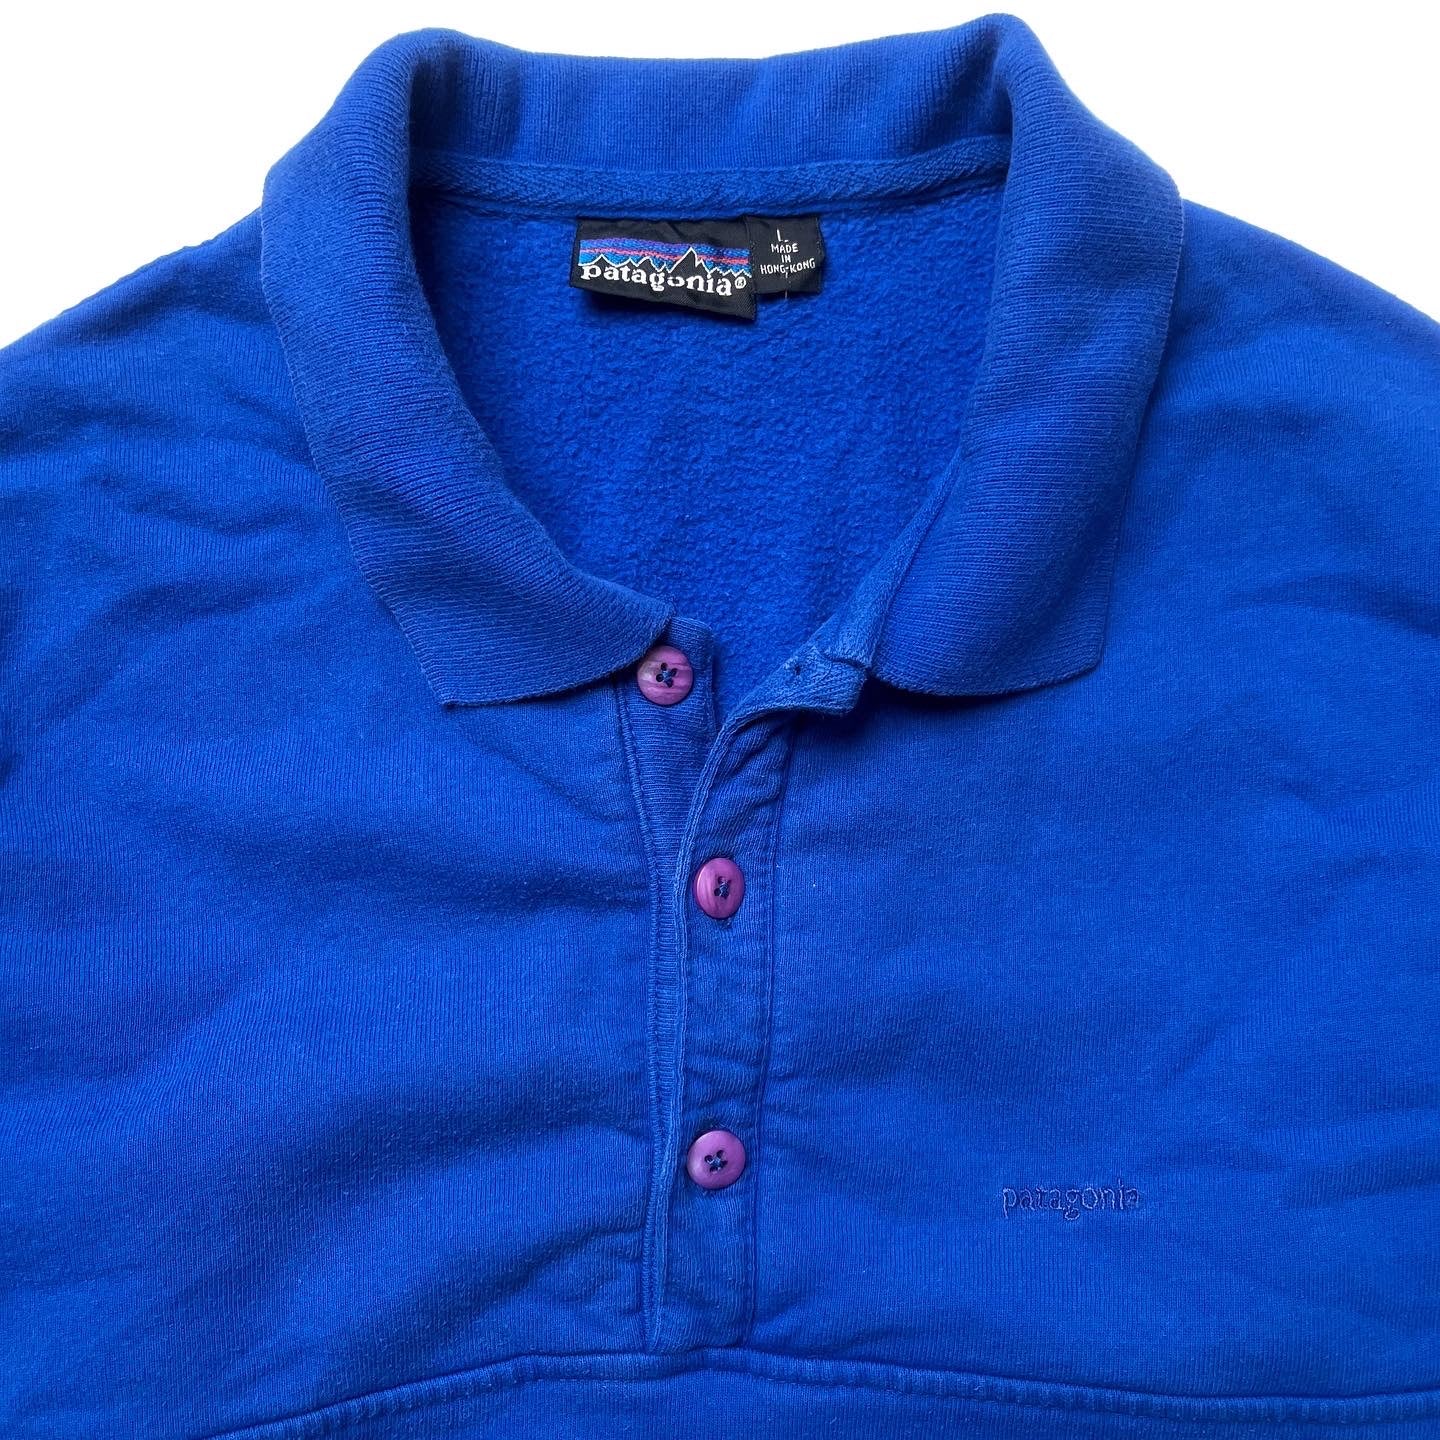 1988 Patagonia Lightweight Cotton Sweatshirt, Cobalt Blue (S)